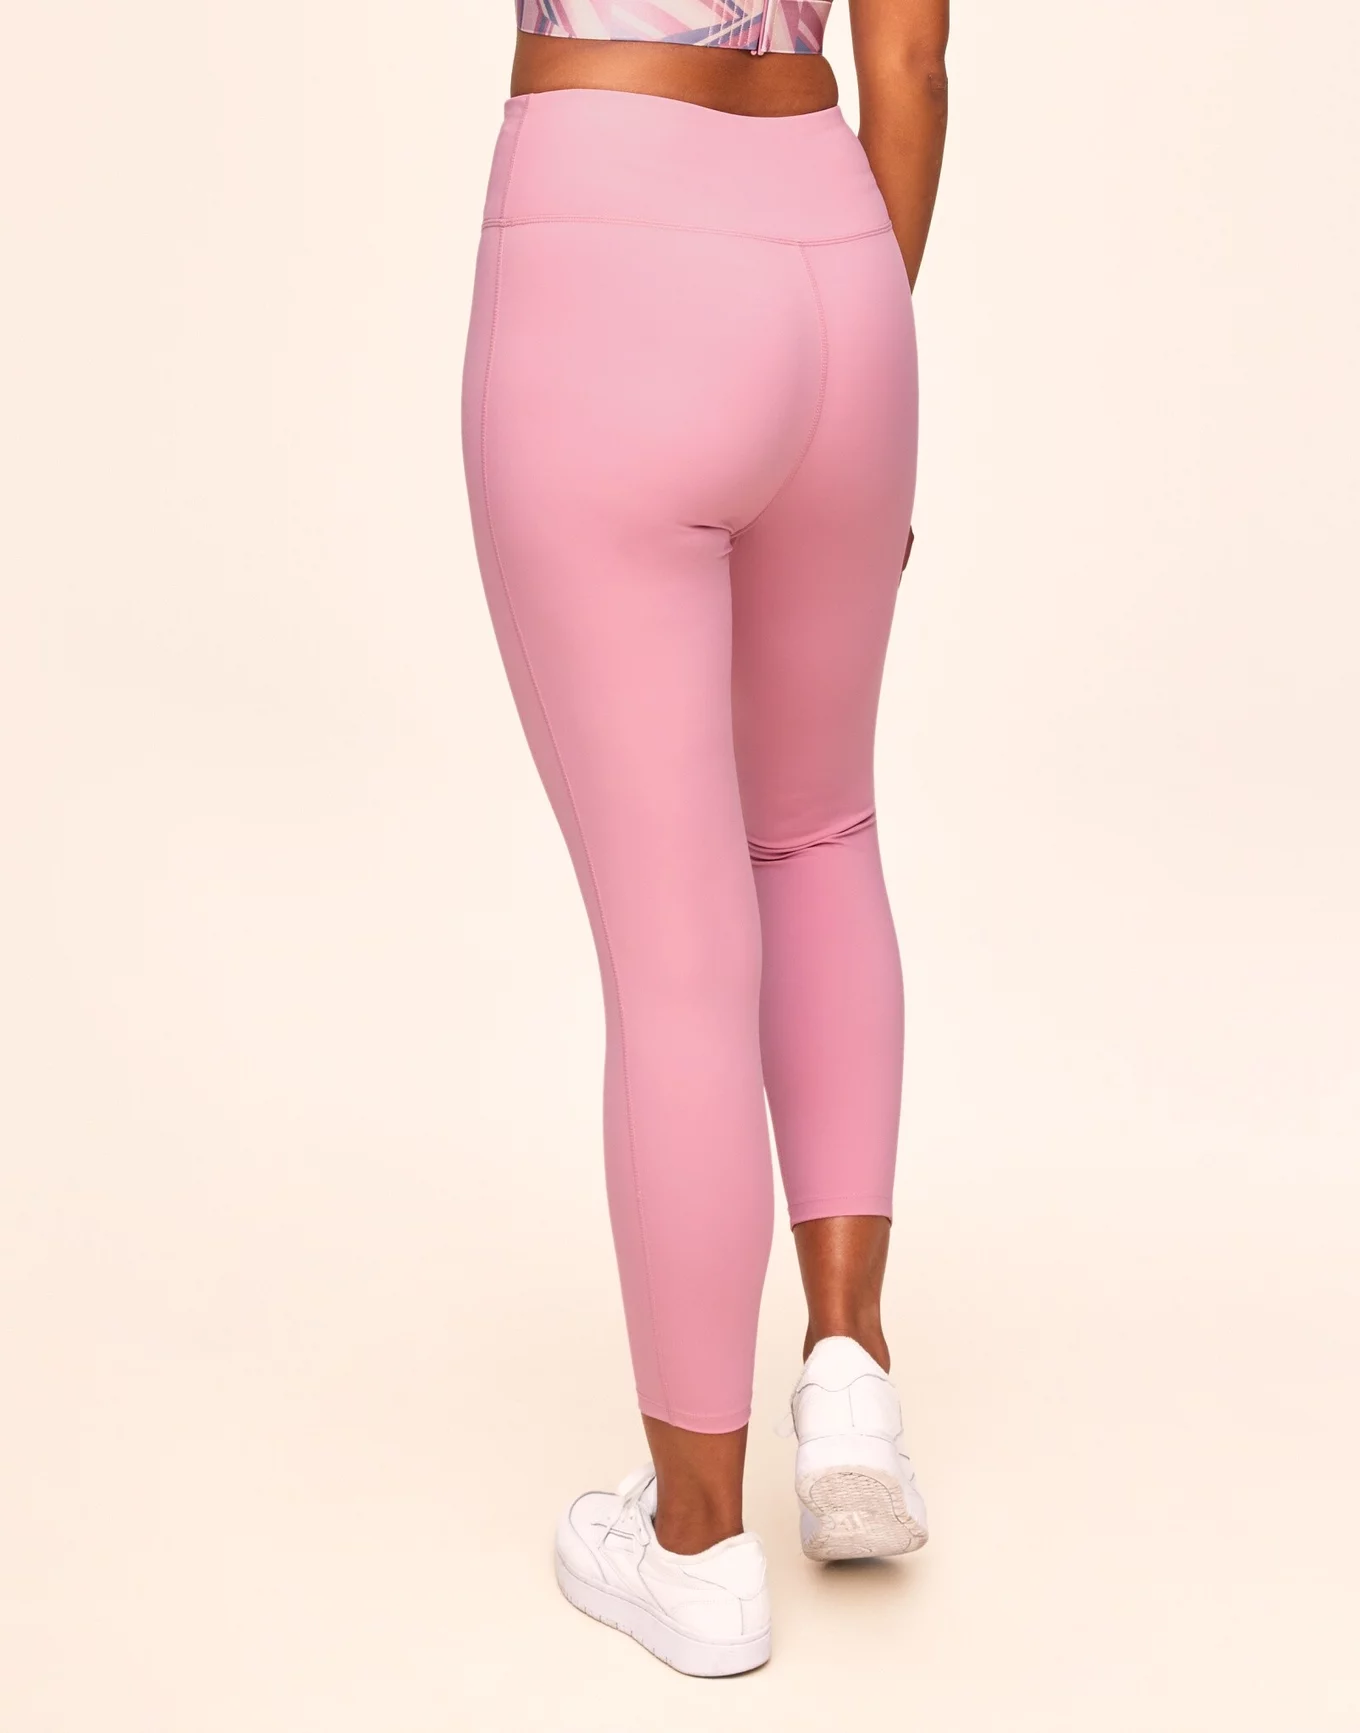 New M Pink Seamless Workout Medium Legging Lilac Ombre Victoria Secret